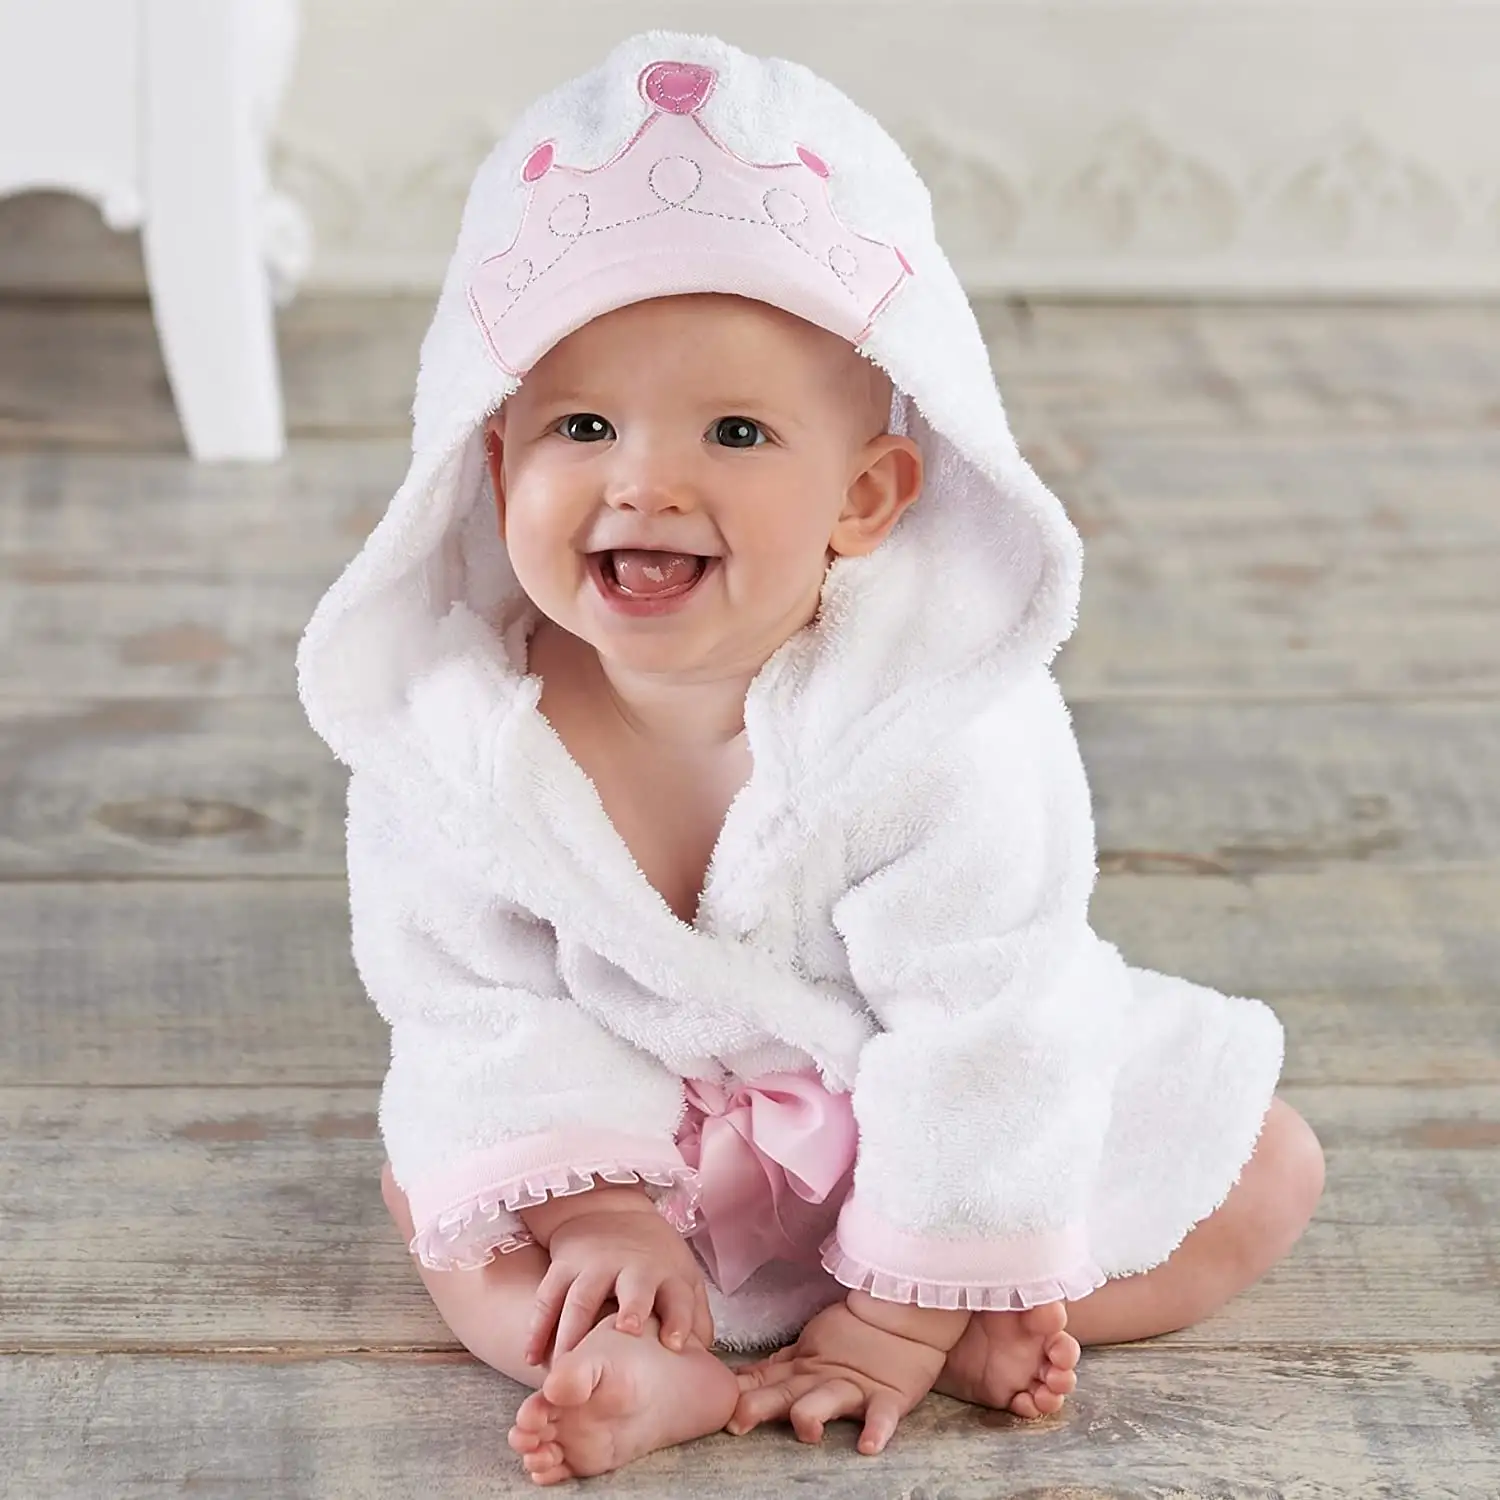 Newborn Baby Robes Cartoon Hooded Sleep Bathrobe Gown Sleepwear Infantil Bath Towel Kids Baby Girls Clothes